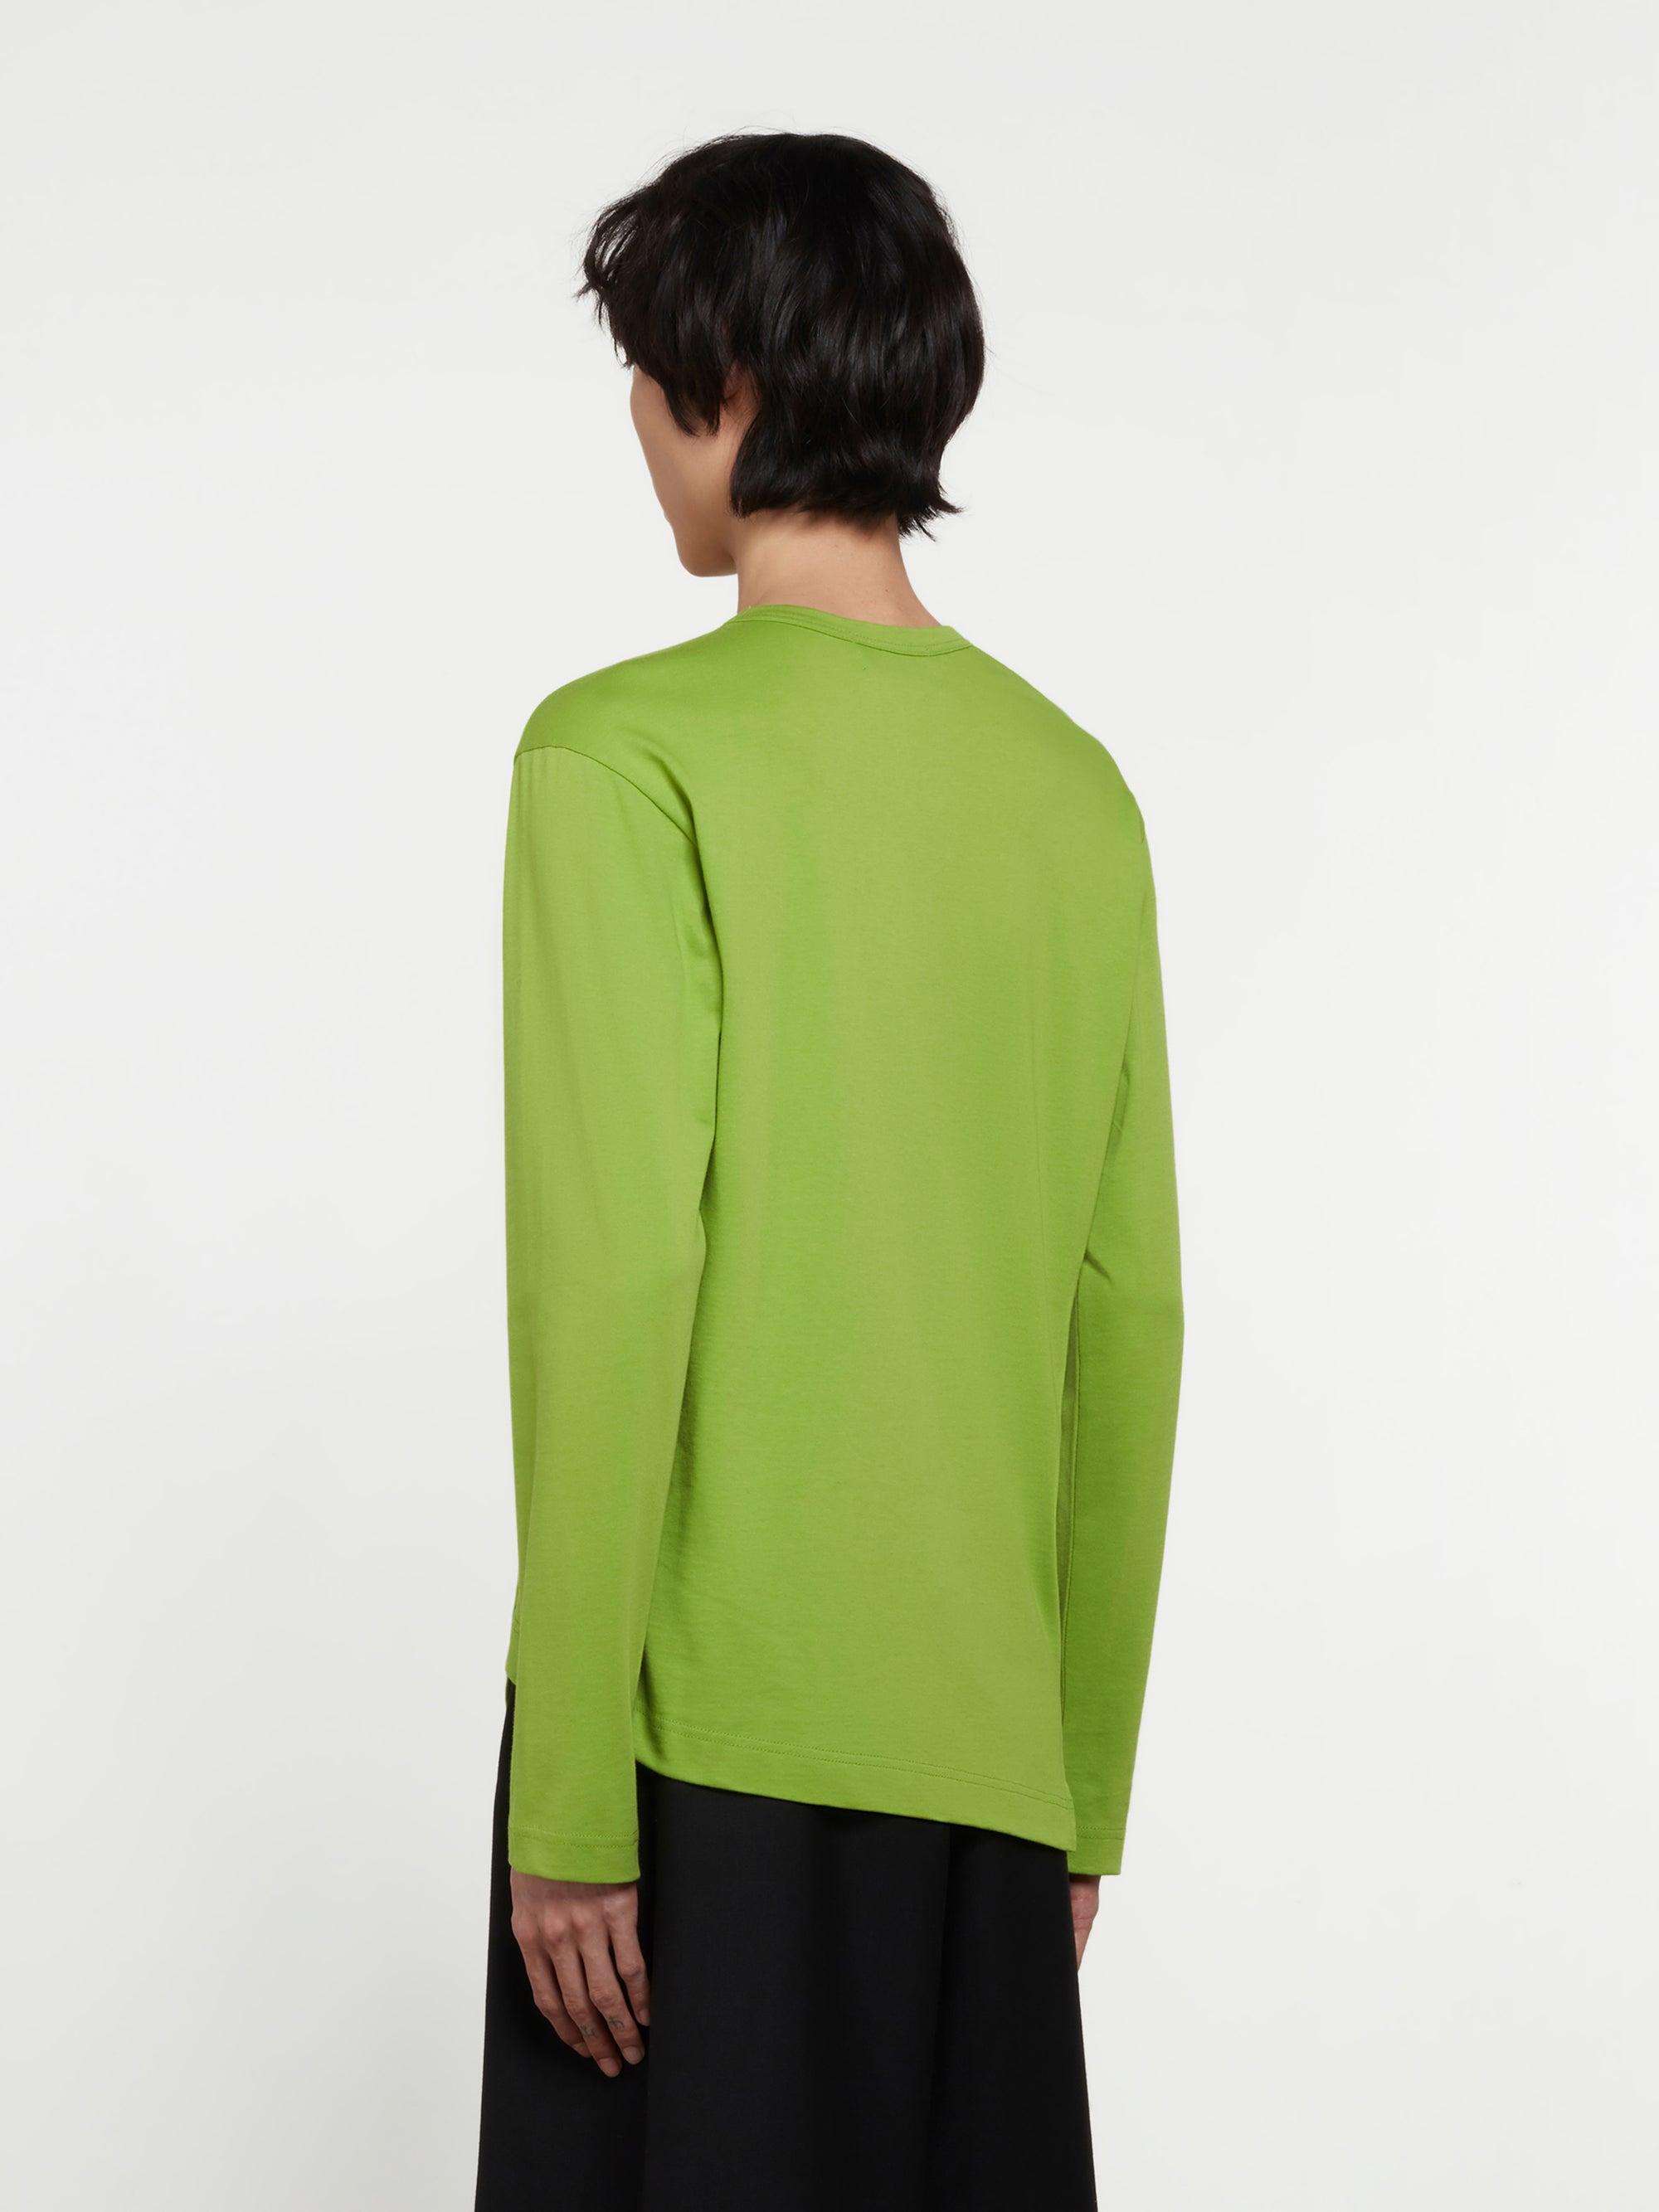 CDG Shirt - Lacoste Men’s Long Sleeve T-Shirt - (Green) view 3